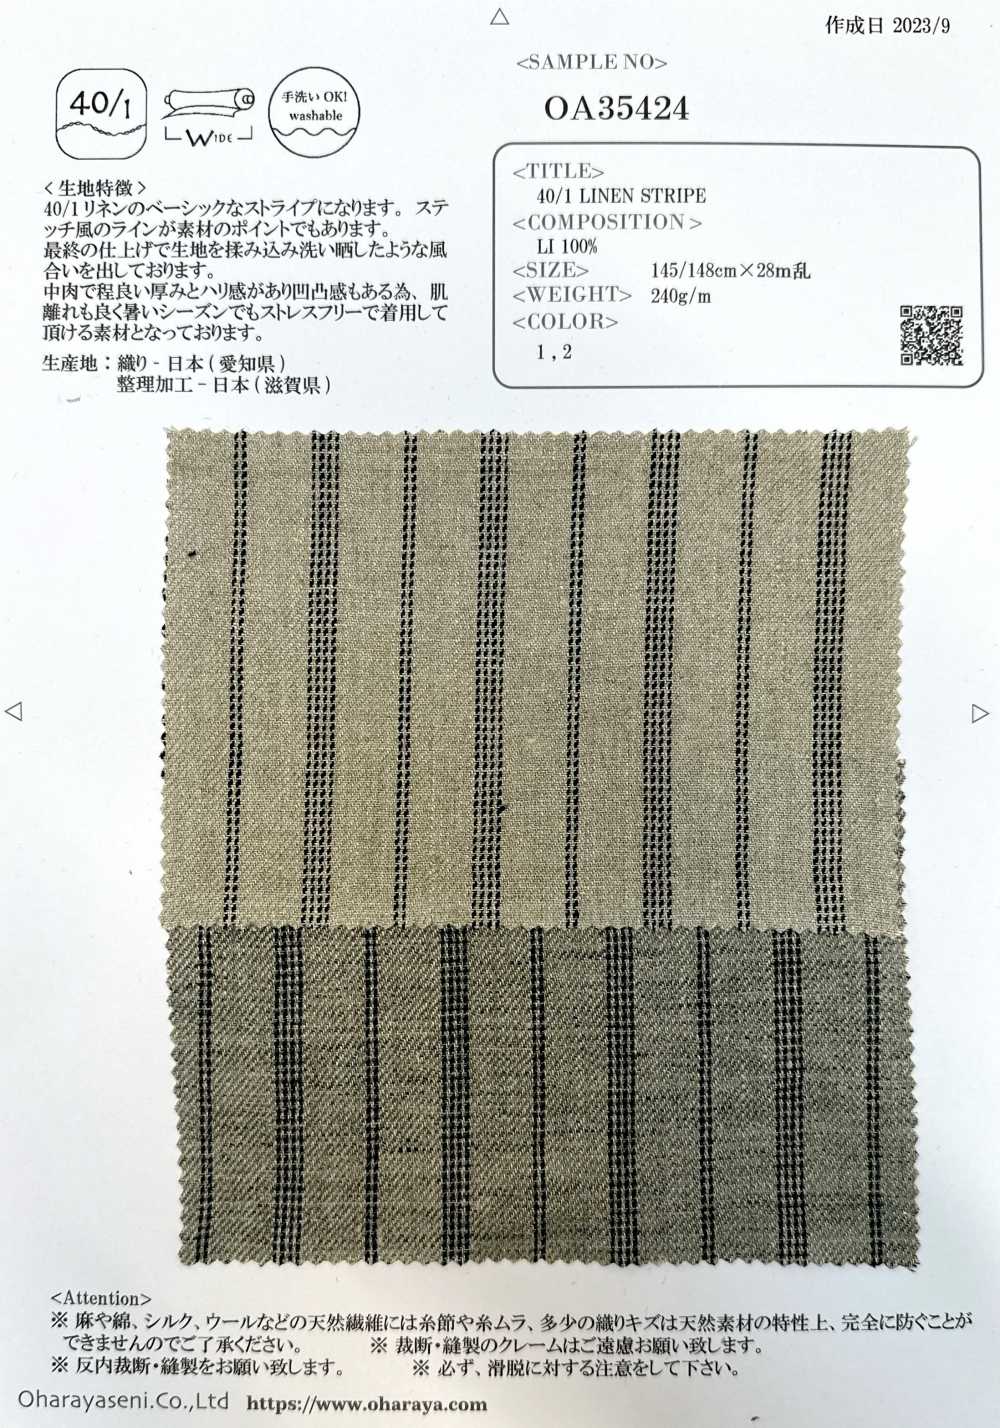 OA35424 RISCA LINHO 40/1[Têxtil / Tecido] Oharayaseni